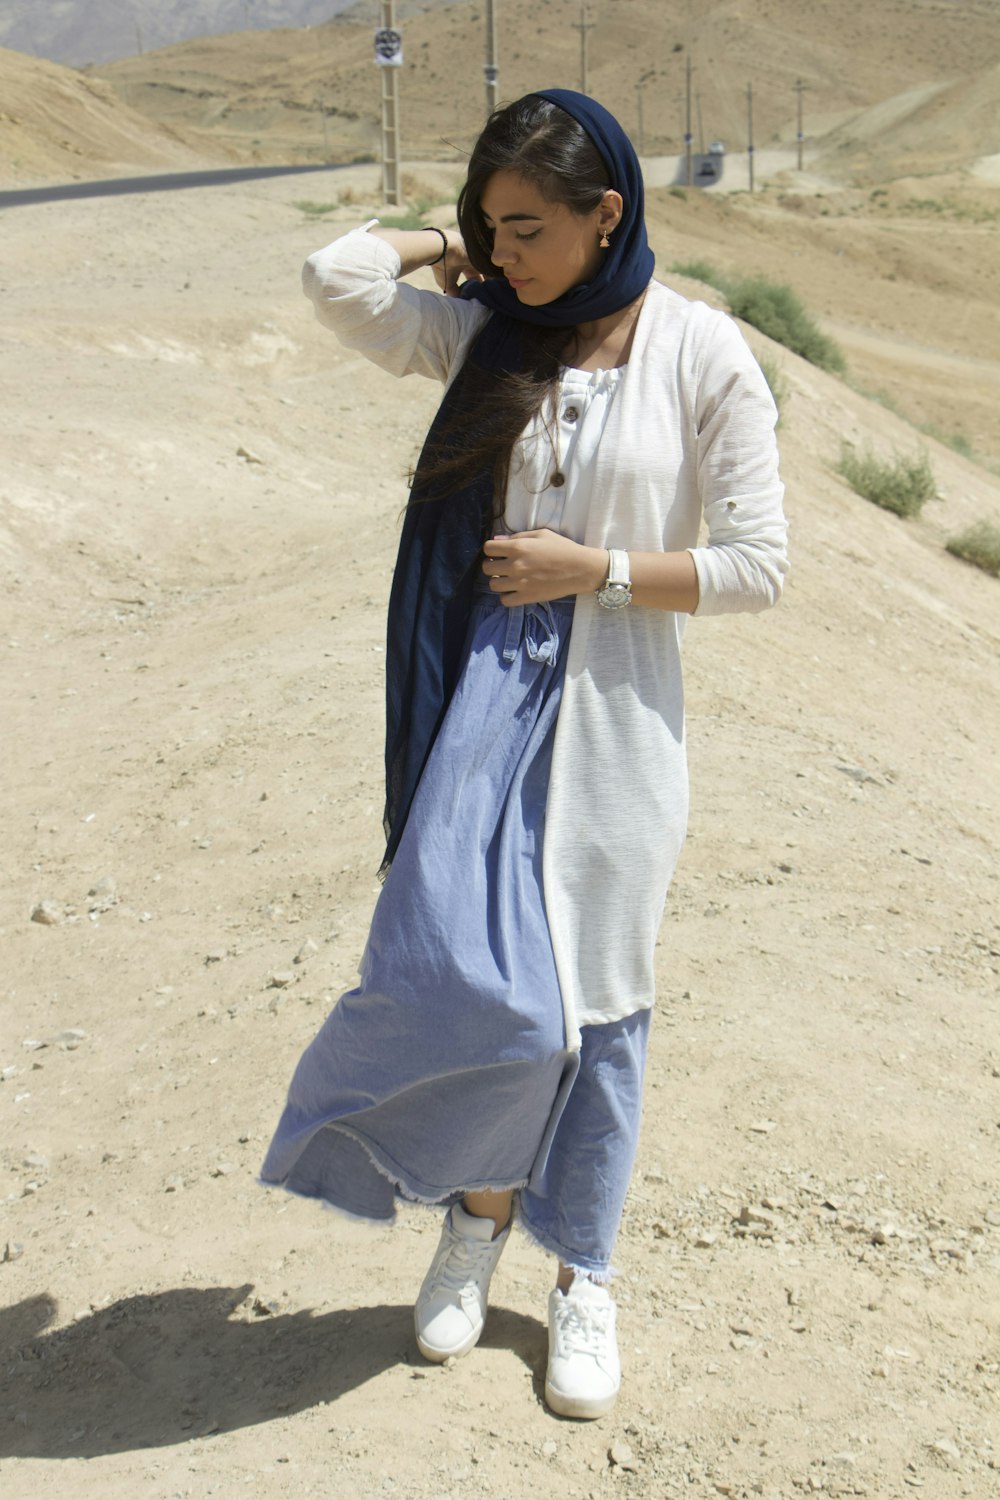 a woman standing on a dirt road wearing a blue dress